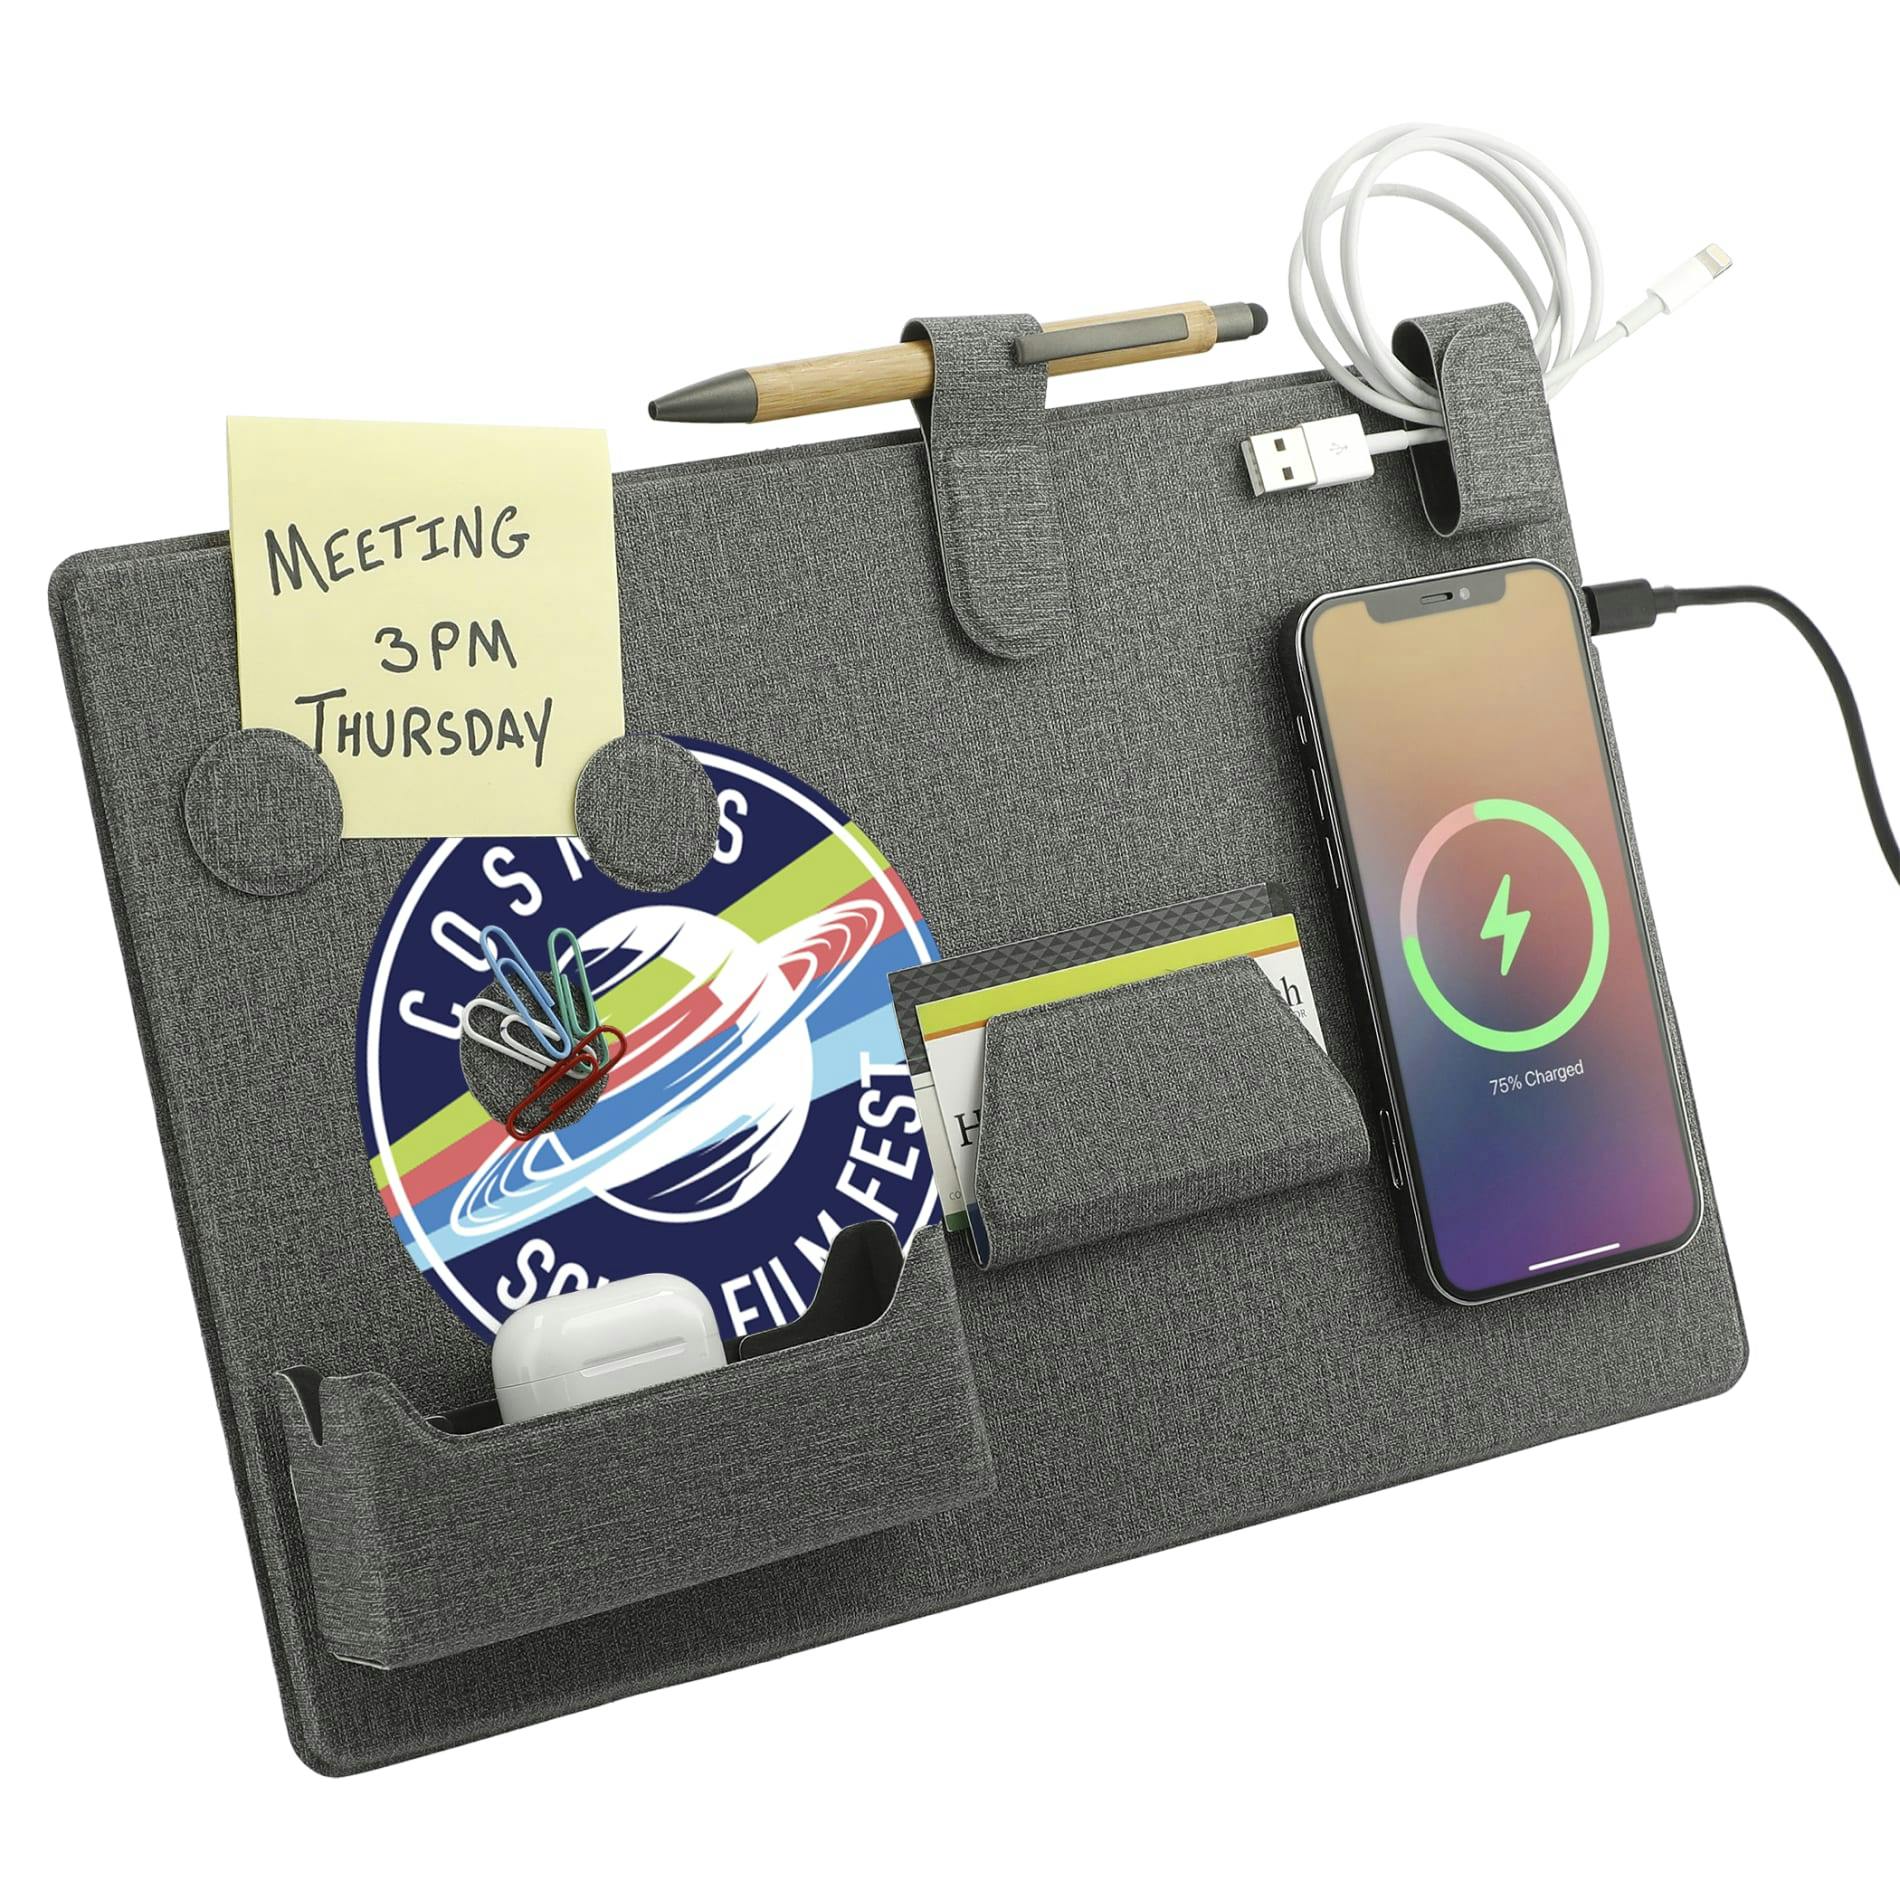 MagClick™ Fast Wireless Charging Desk Organizer - additional Image 6